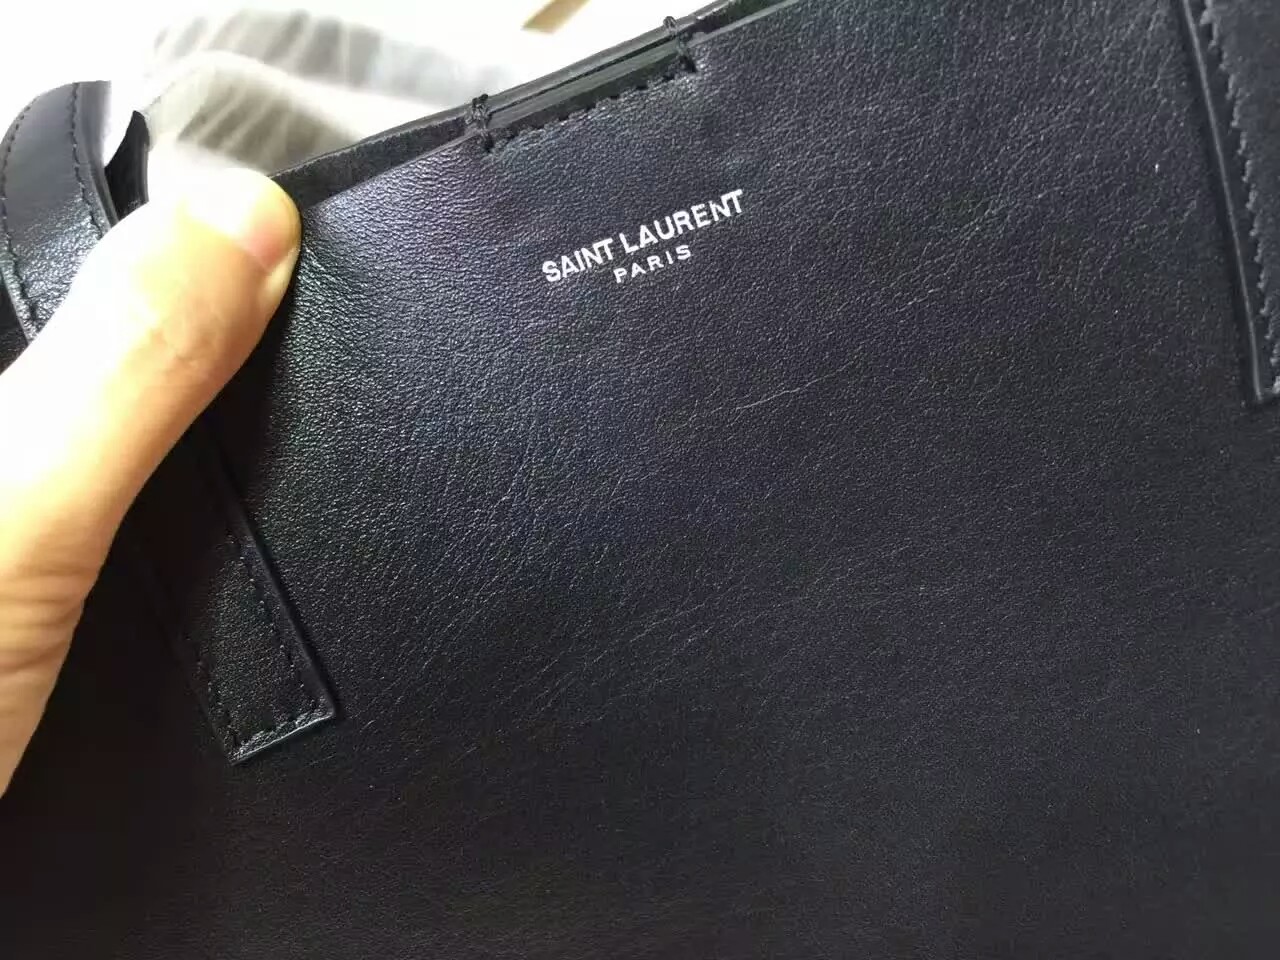 2016 New Saint Laurent Bag Cheap Sale-Saint Laurent Large Shopping Tote Bag in Black Leather - Click Image to Close